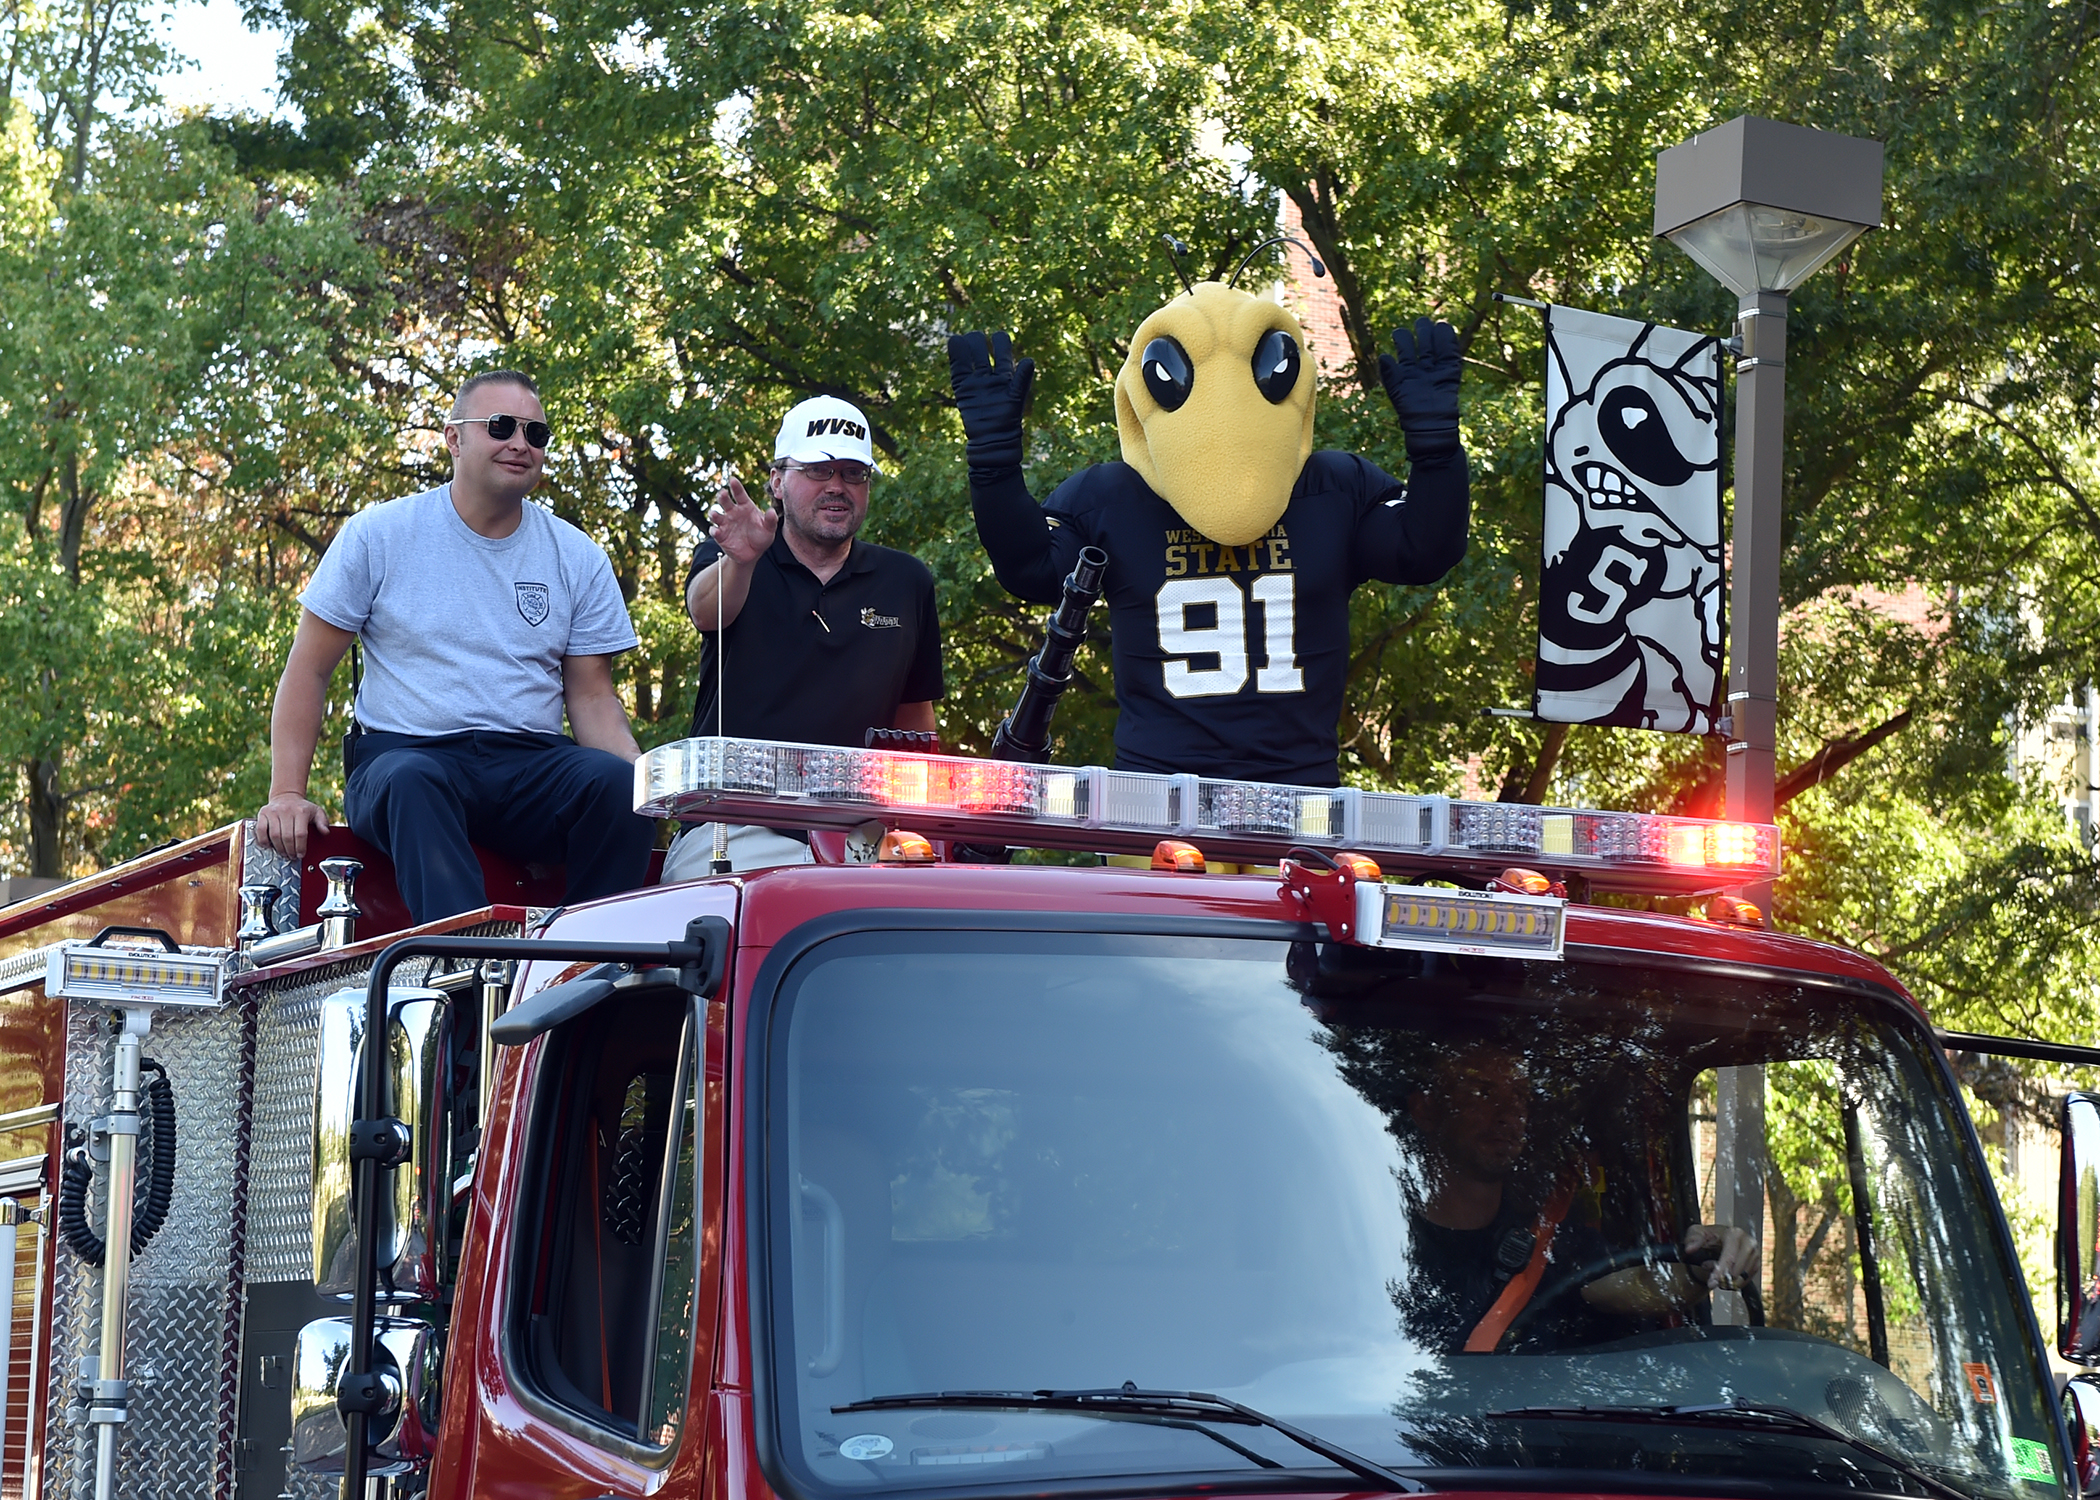 WVSU Mascot rides with two men on a firetruck.